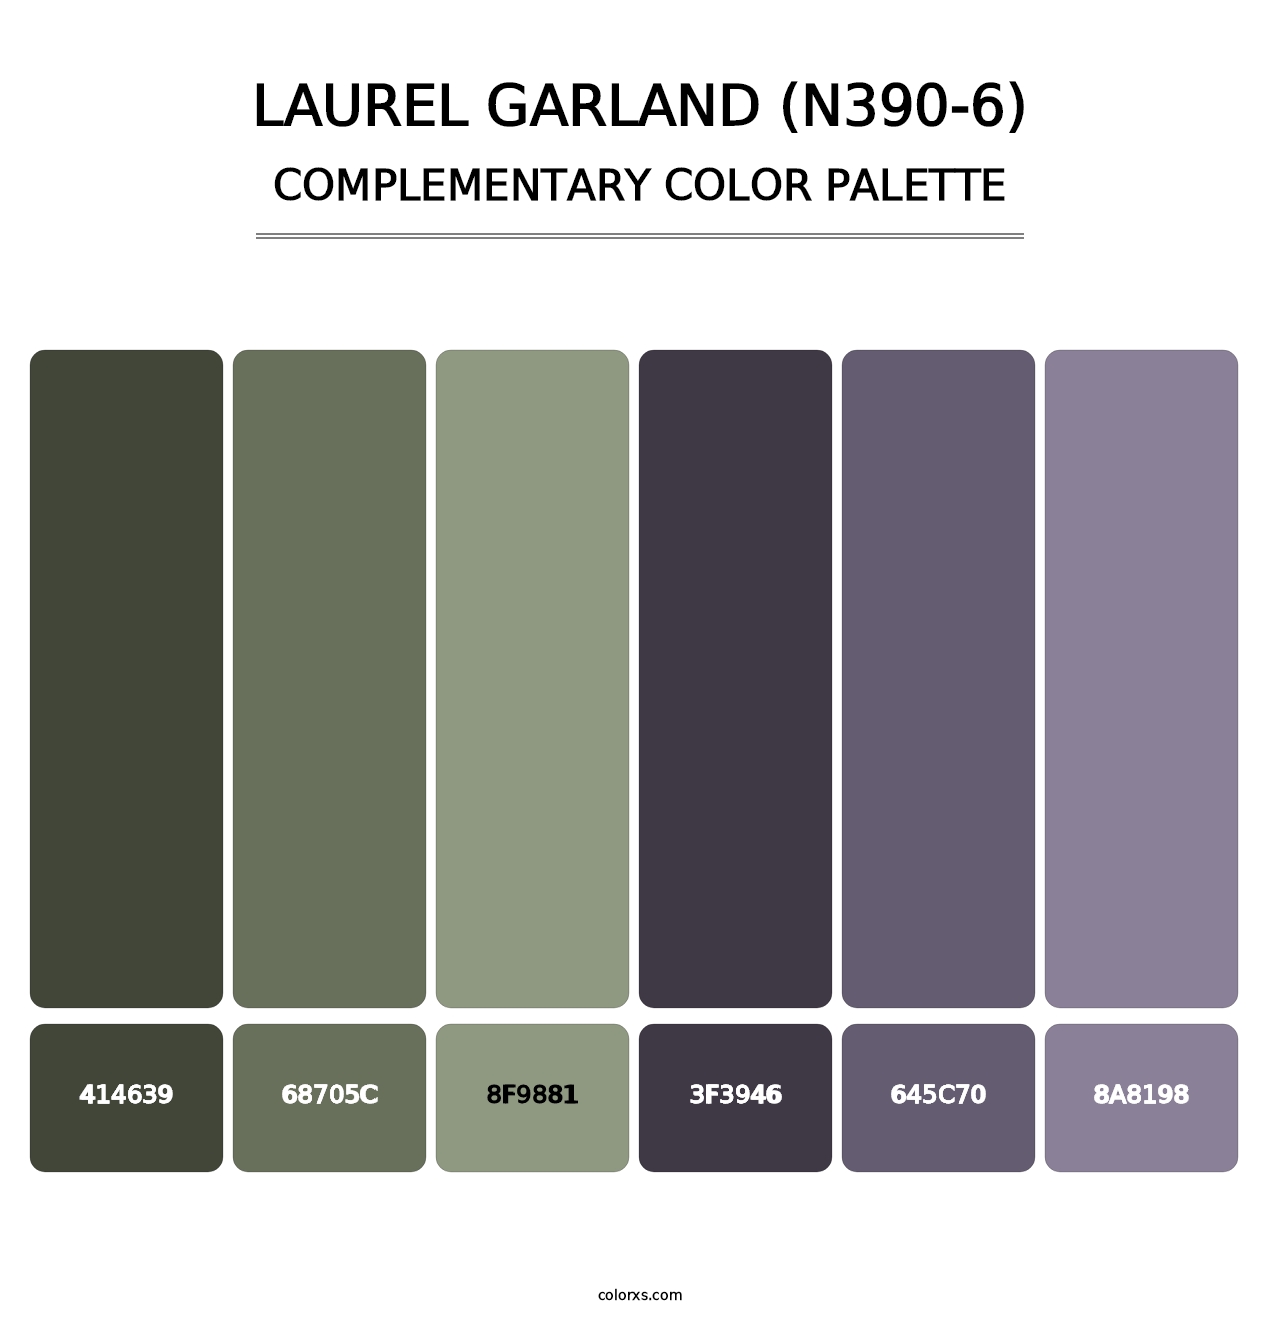 Laurel Garland (N390-6) - Complementary Color Palette